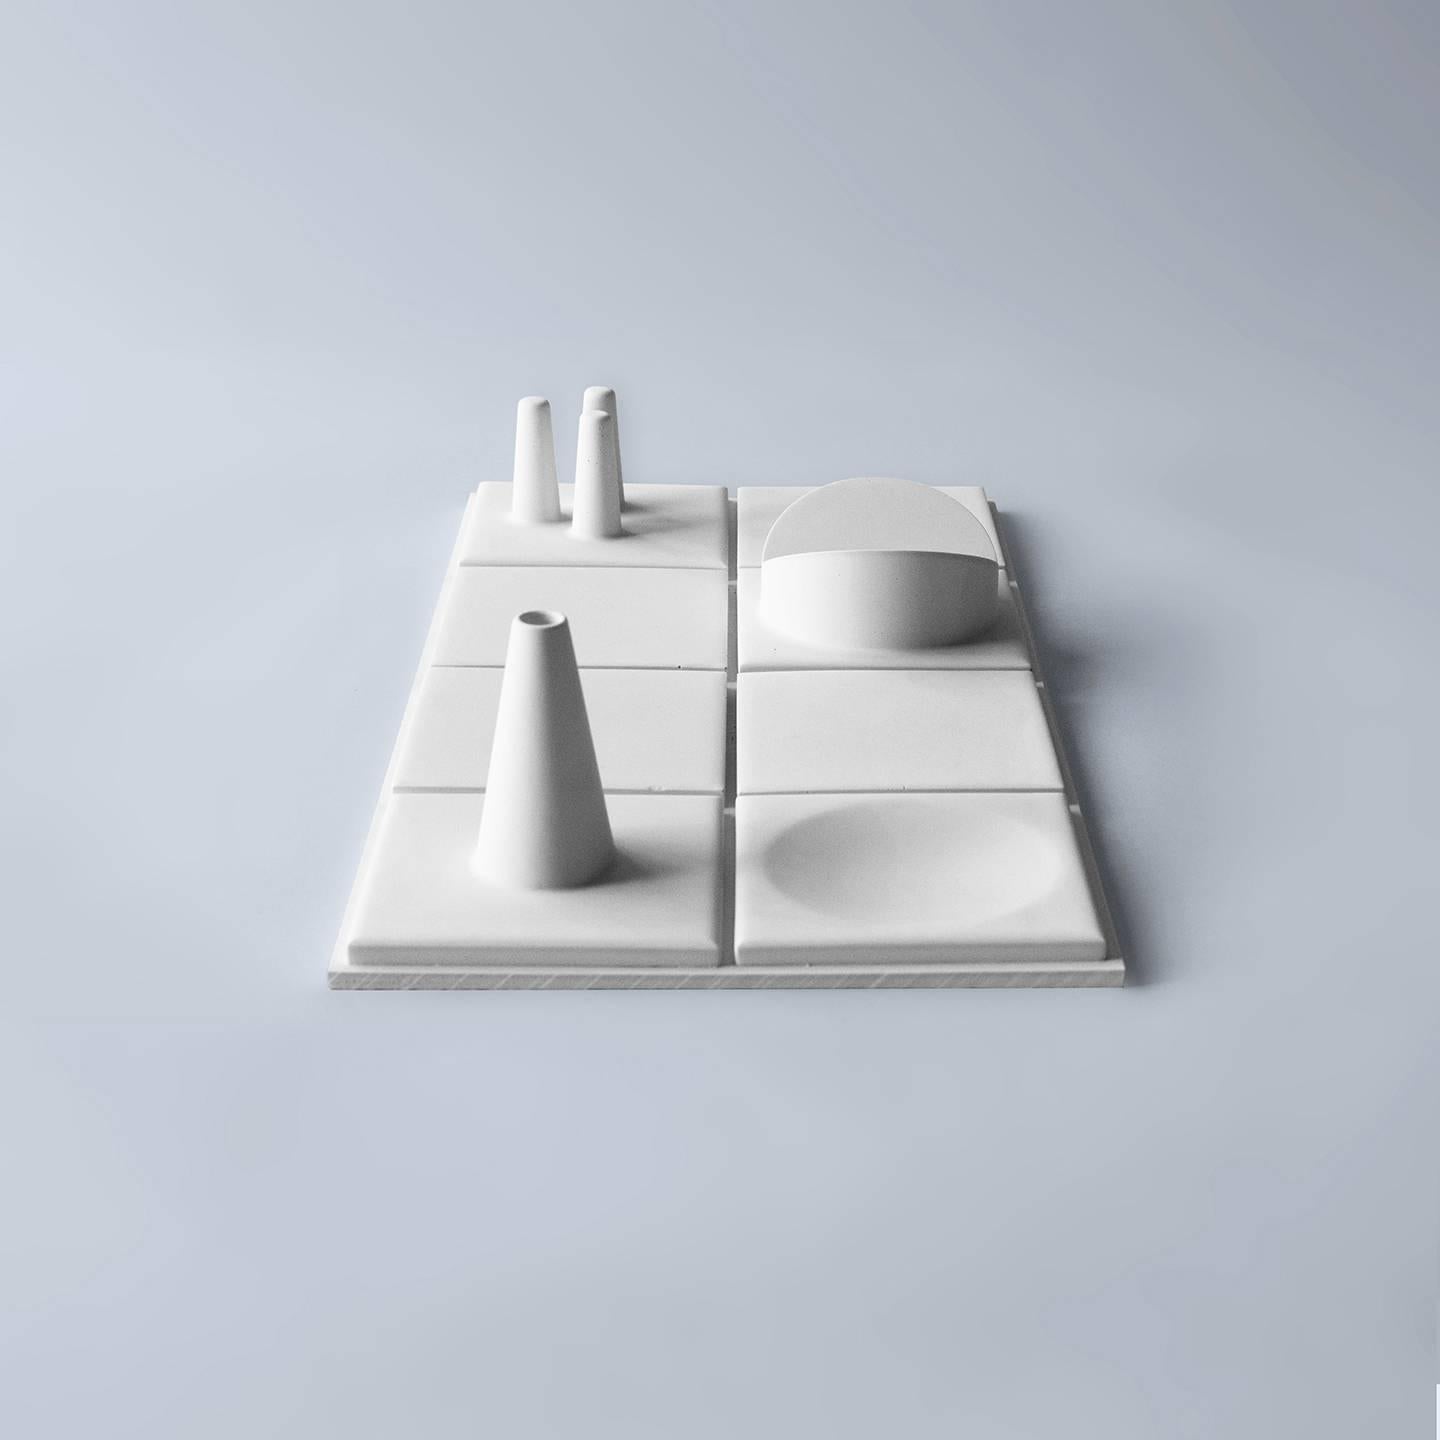 American Salle de Bain 'M' Handmade Cast Concrete Tray in White by UMÉ Studio For Sale